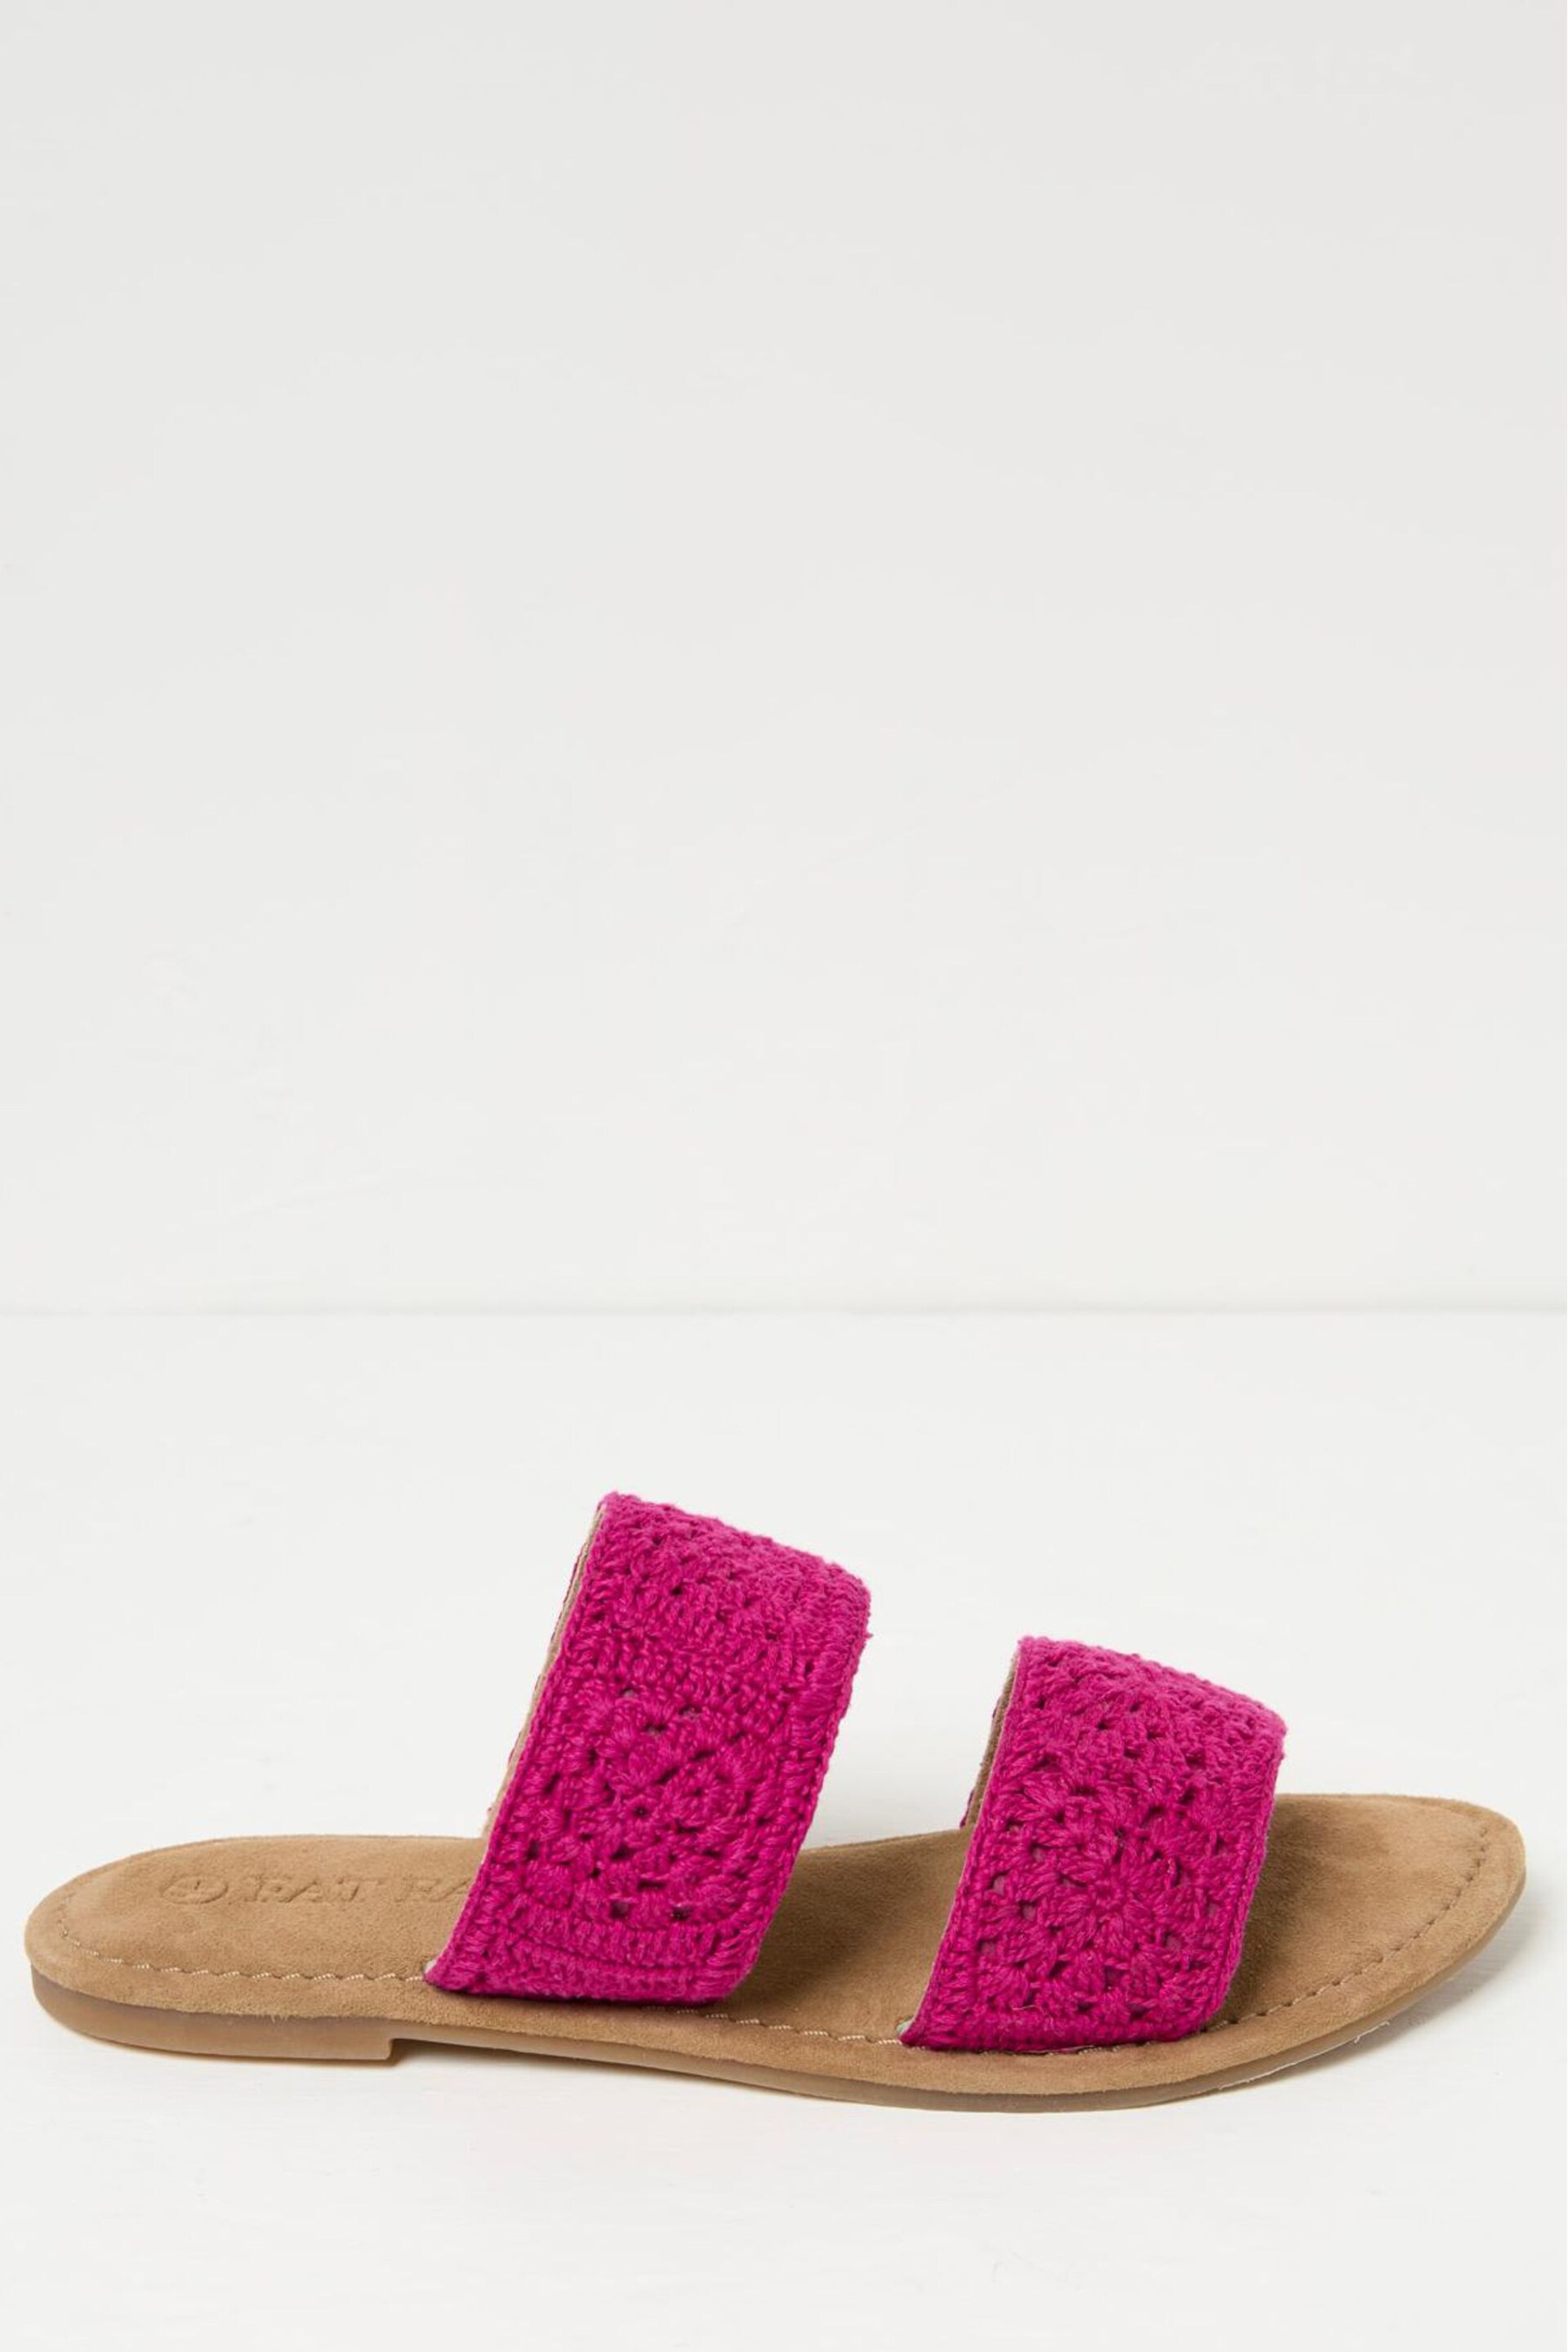 FatFace Pink Penelope Crochet Sliders - Image 1 of 3